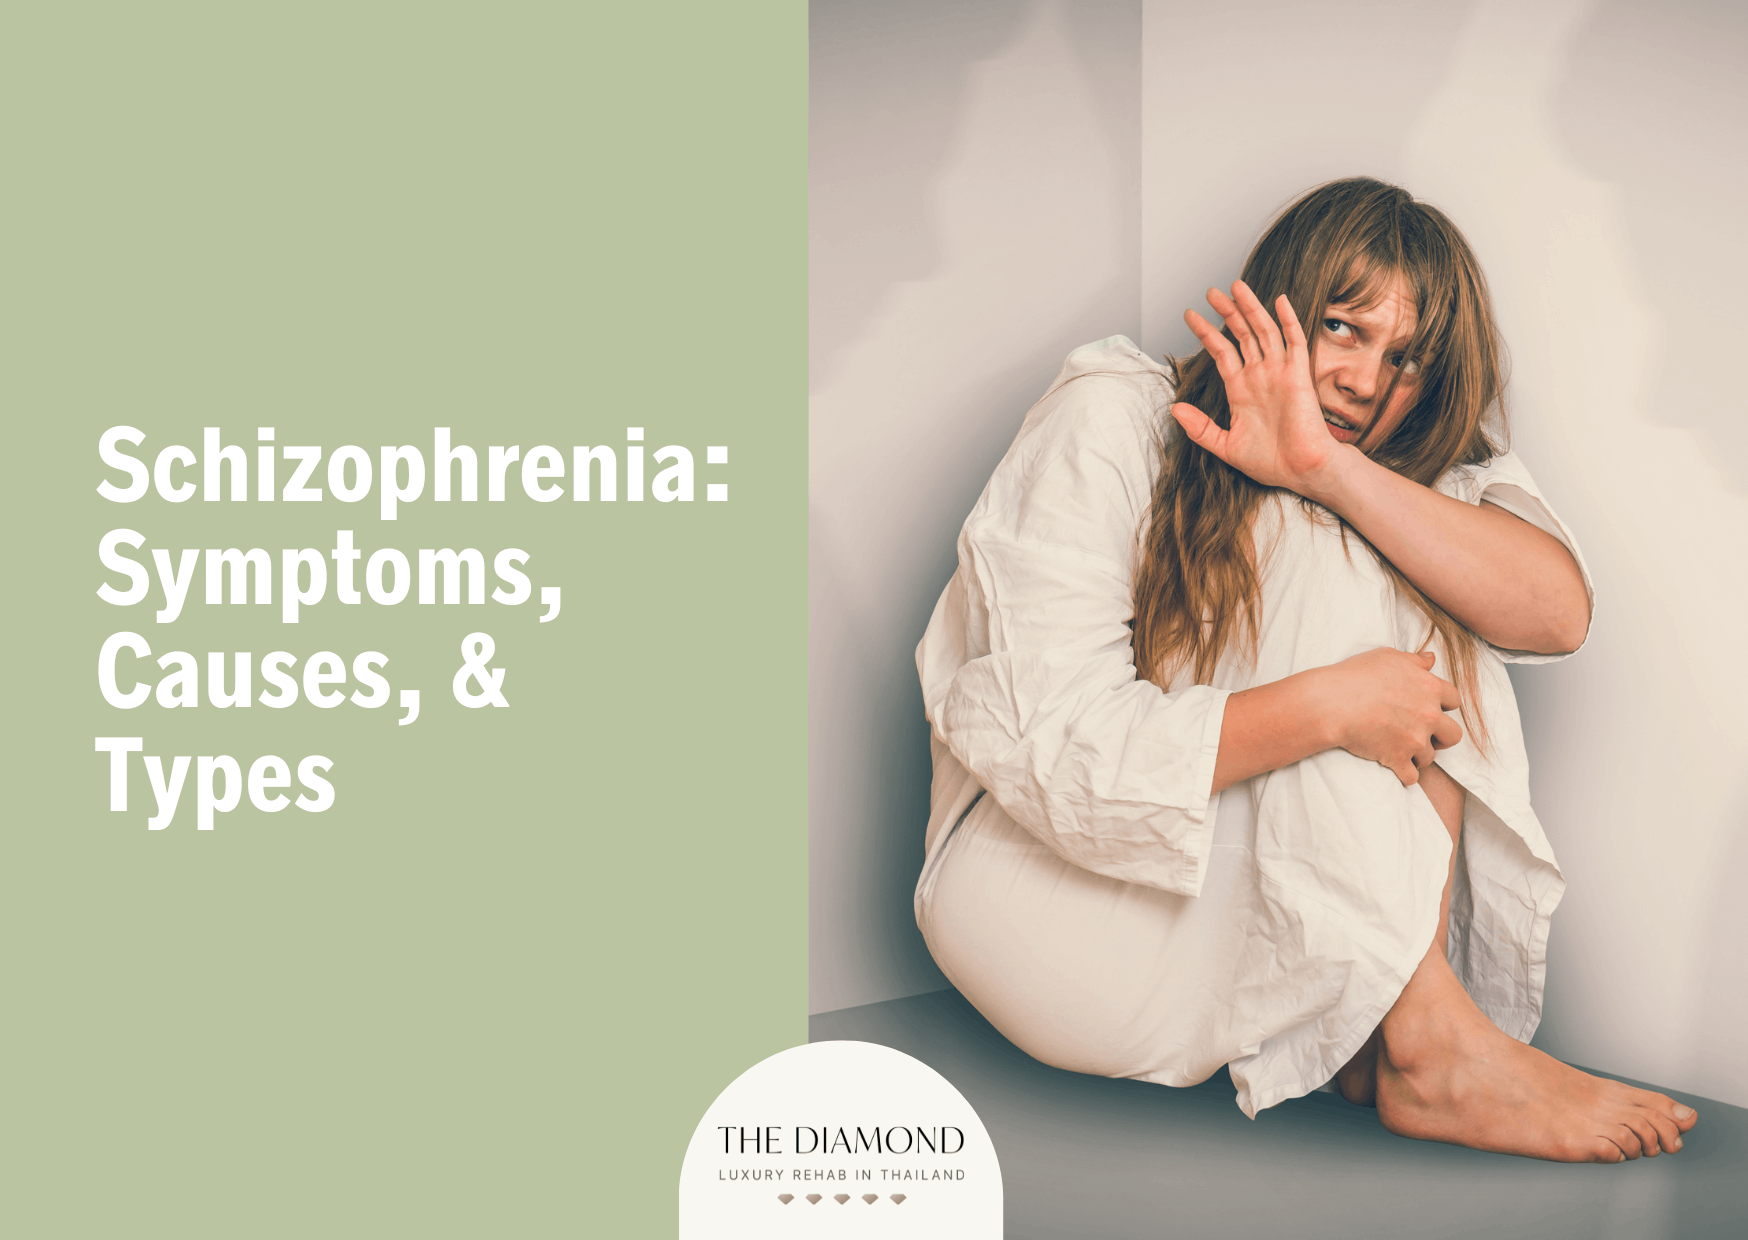 Schizophrenia: symptoms, causes, and types